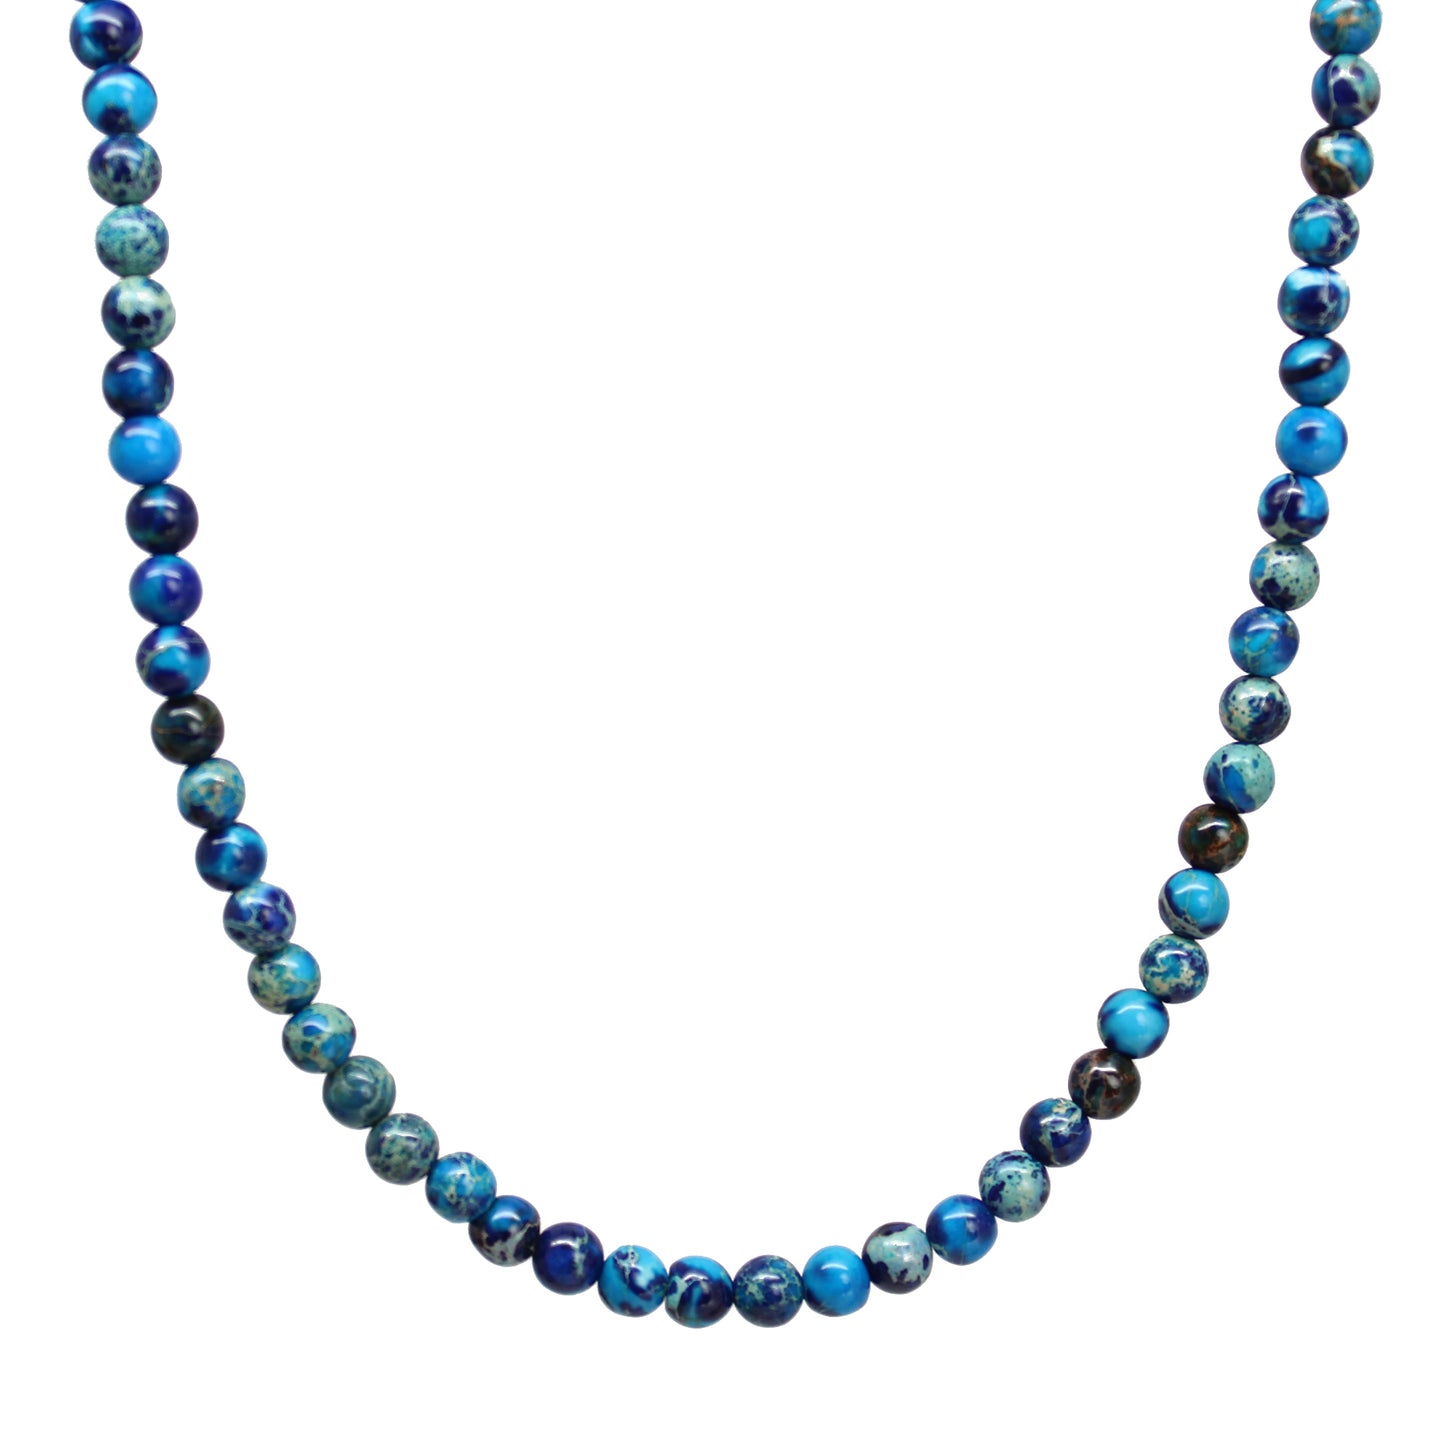 Parvarr Women's Blue Multi Layer Beads Necklace